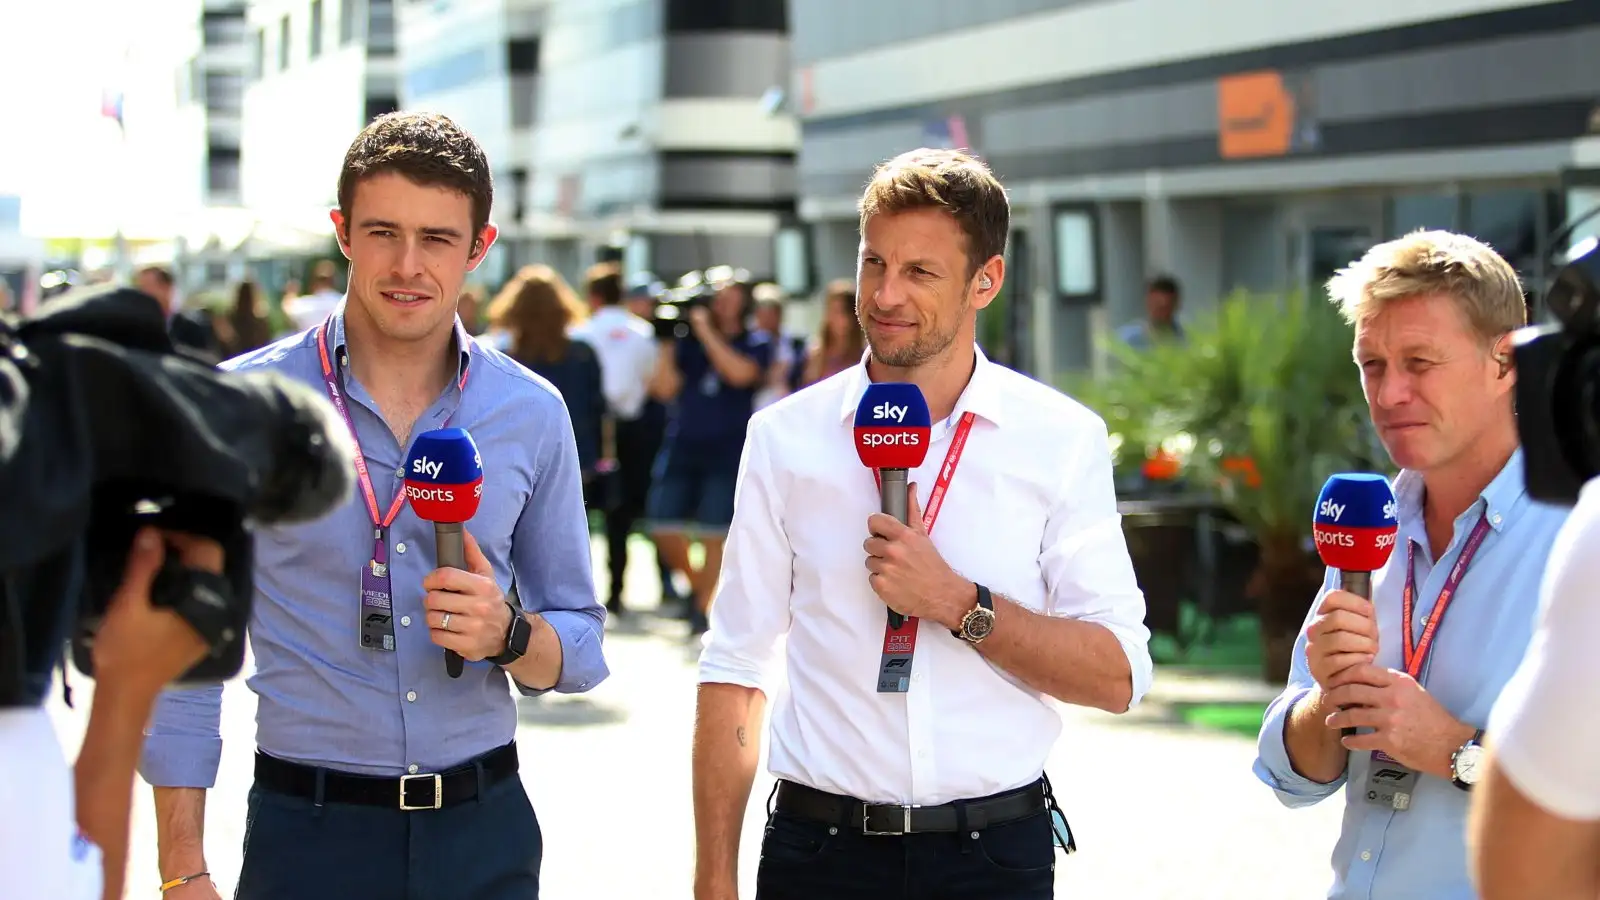 Paul Di Resta, Jenson Button and Simon Lazenby appearing for Sky. Sochi, September 2019.